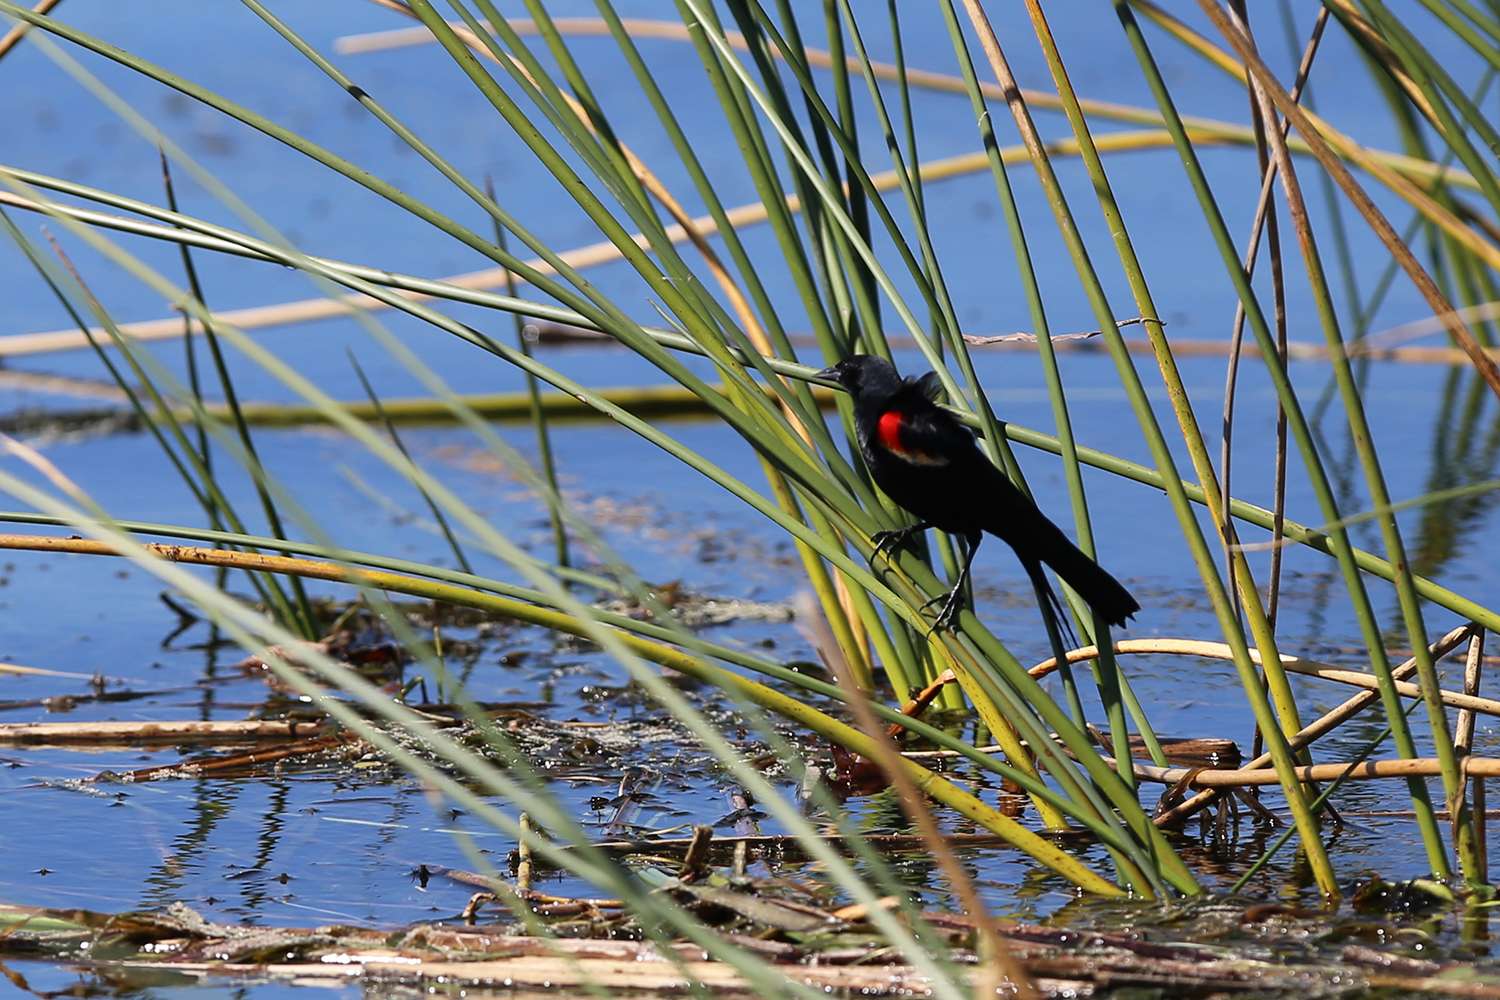 Red-winged blackbird, Bassmaster Elite, Lake Okeechobee, 2017.